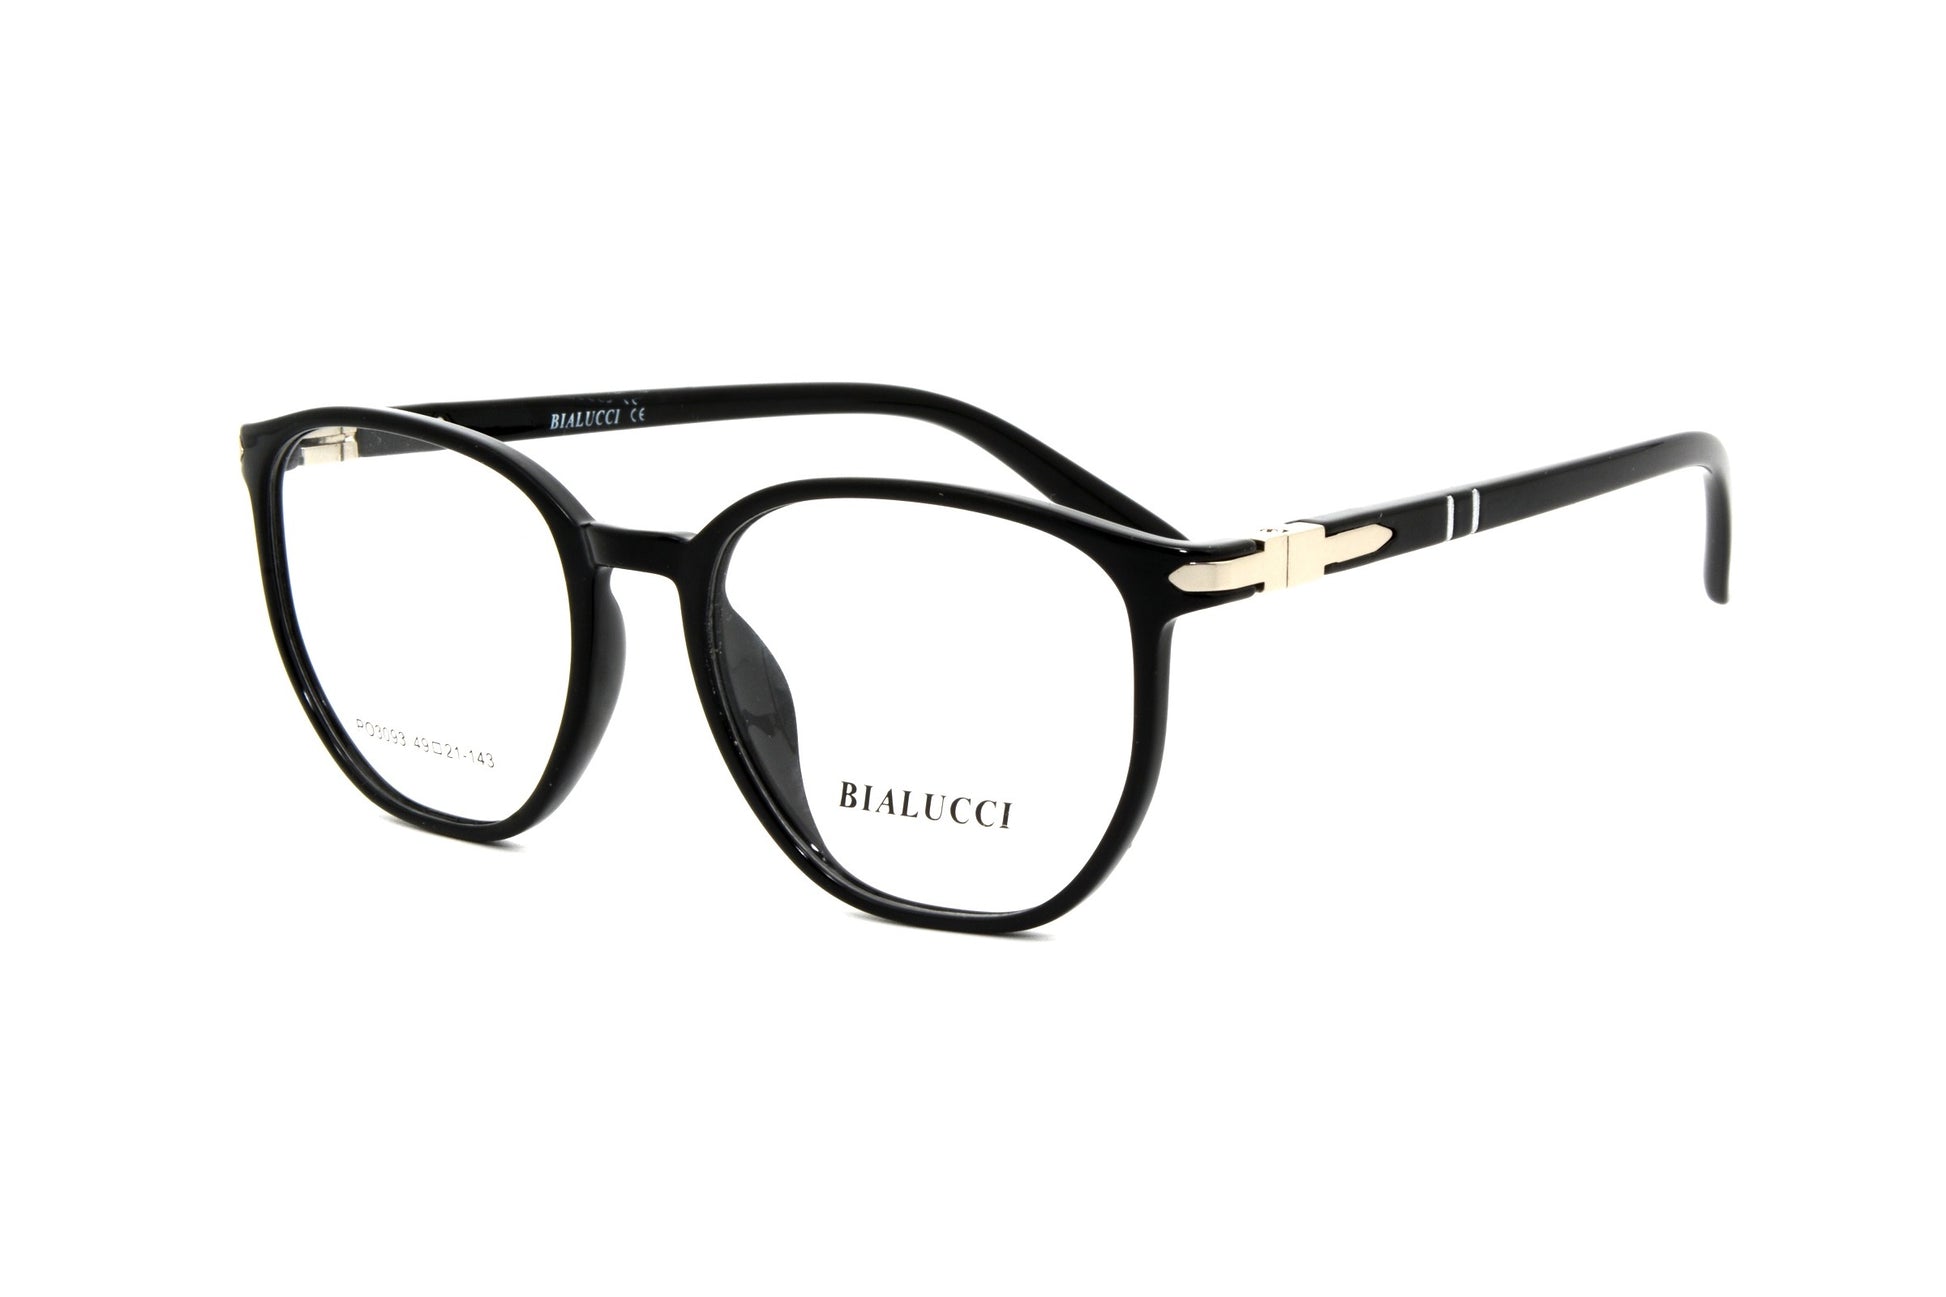 Bialucci eyewear PO 3093 C1